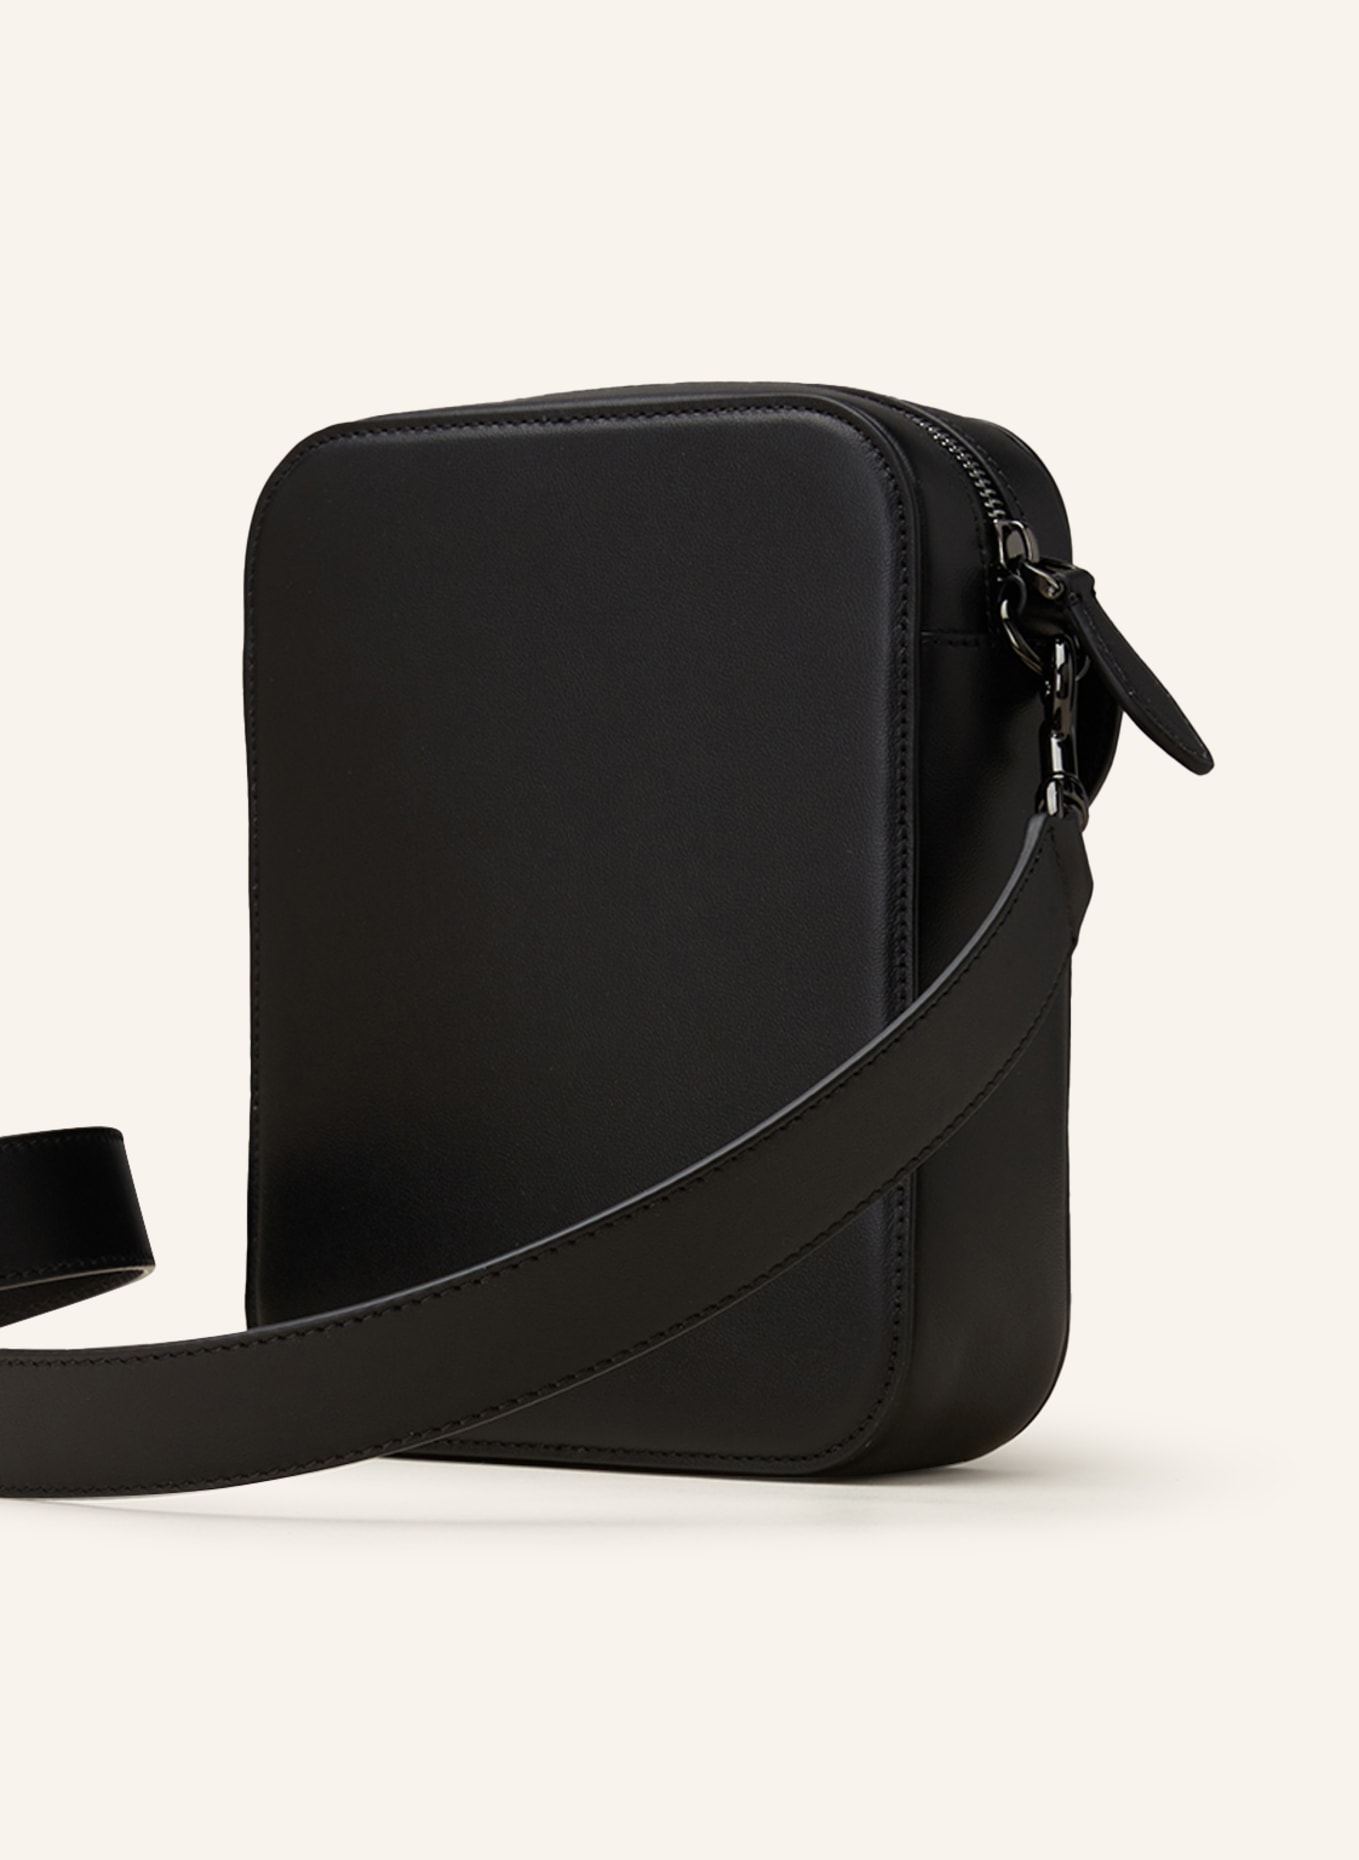 Loco Small Shoulder Bag in Black - Valentino Garavani